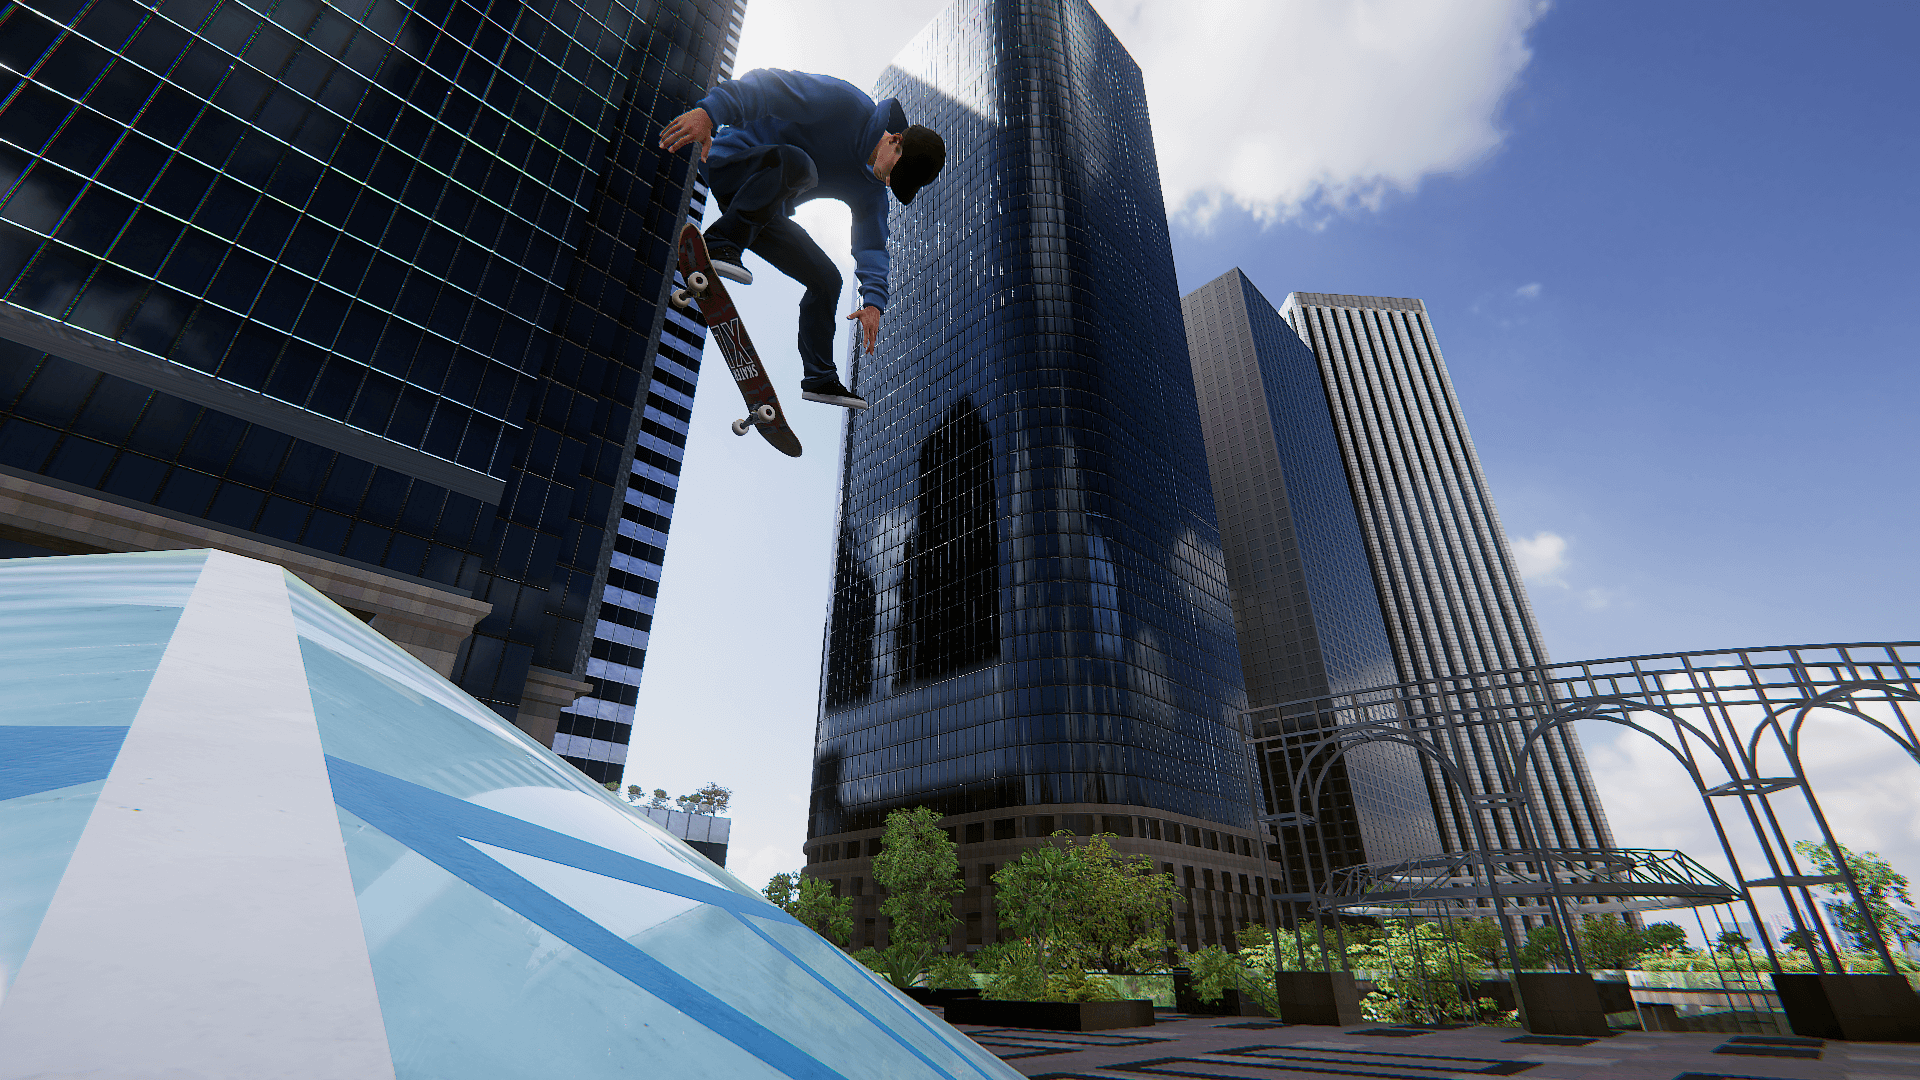 skater-xl-skyscraper